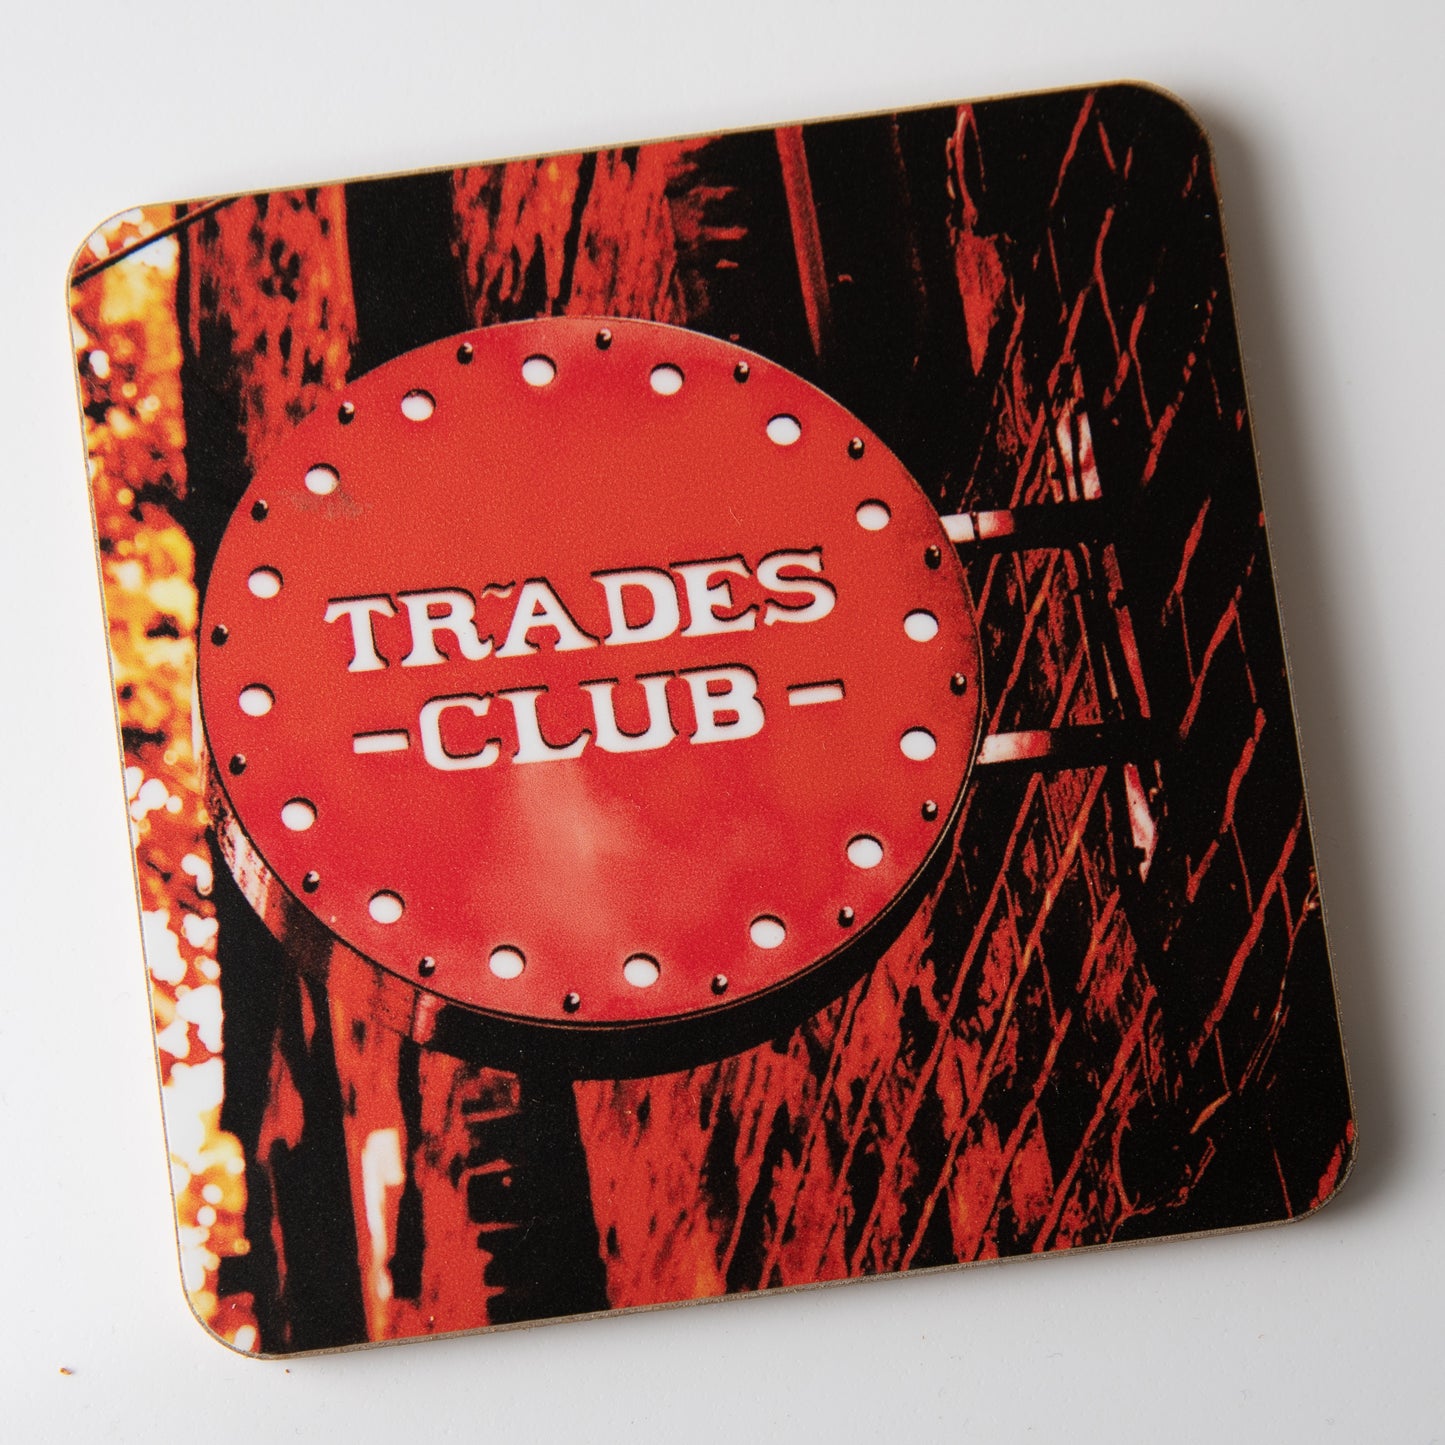 Trades Club Red coaster